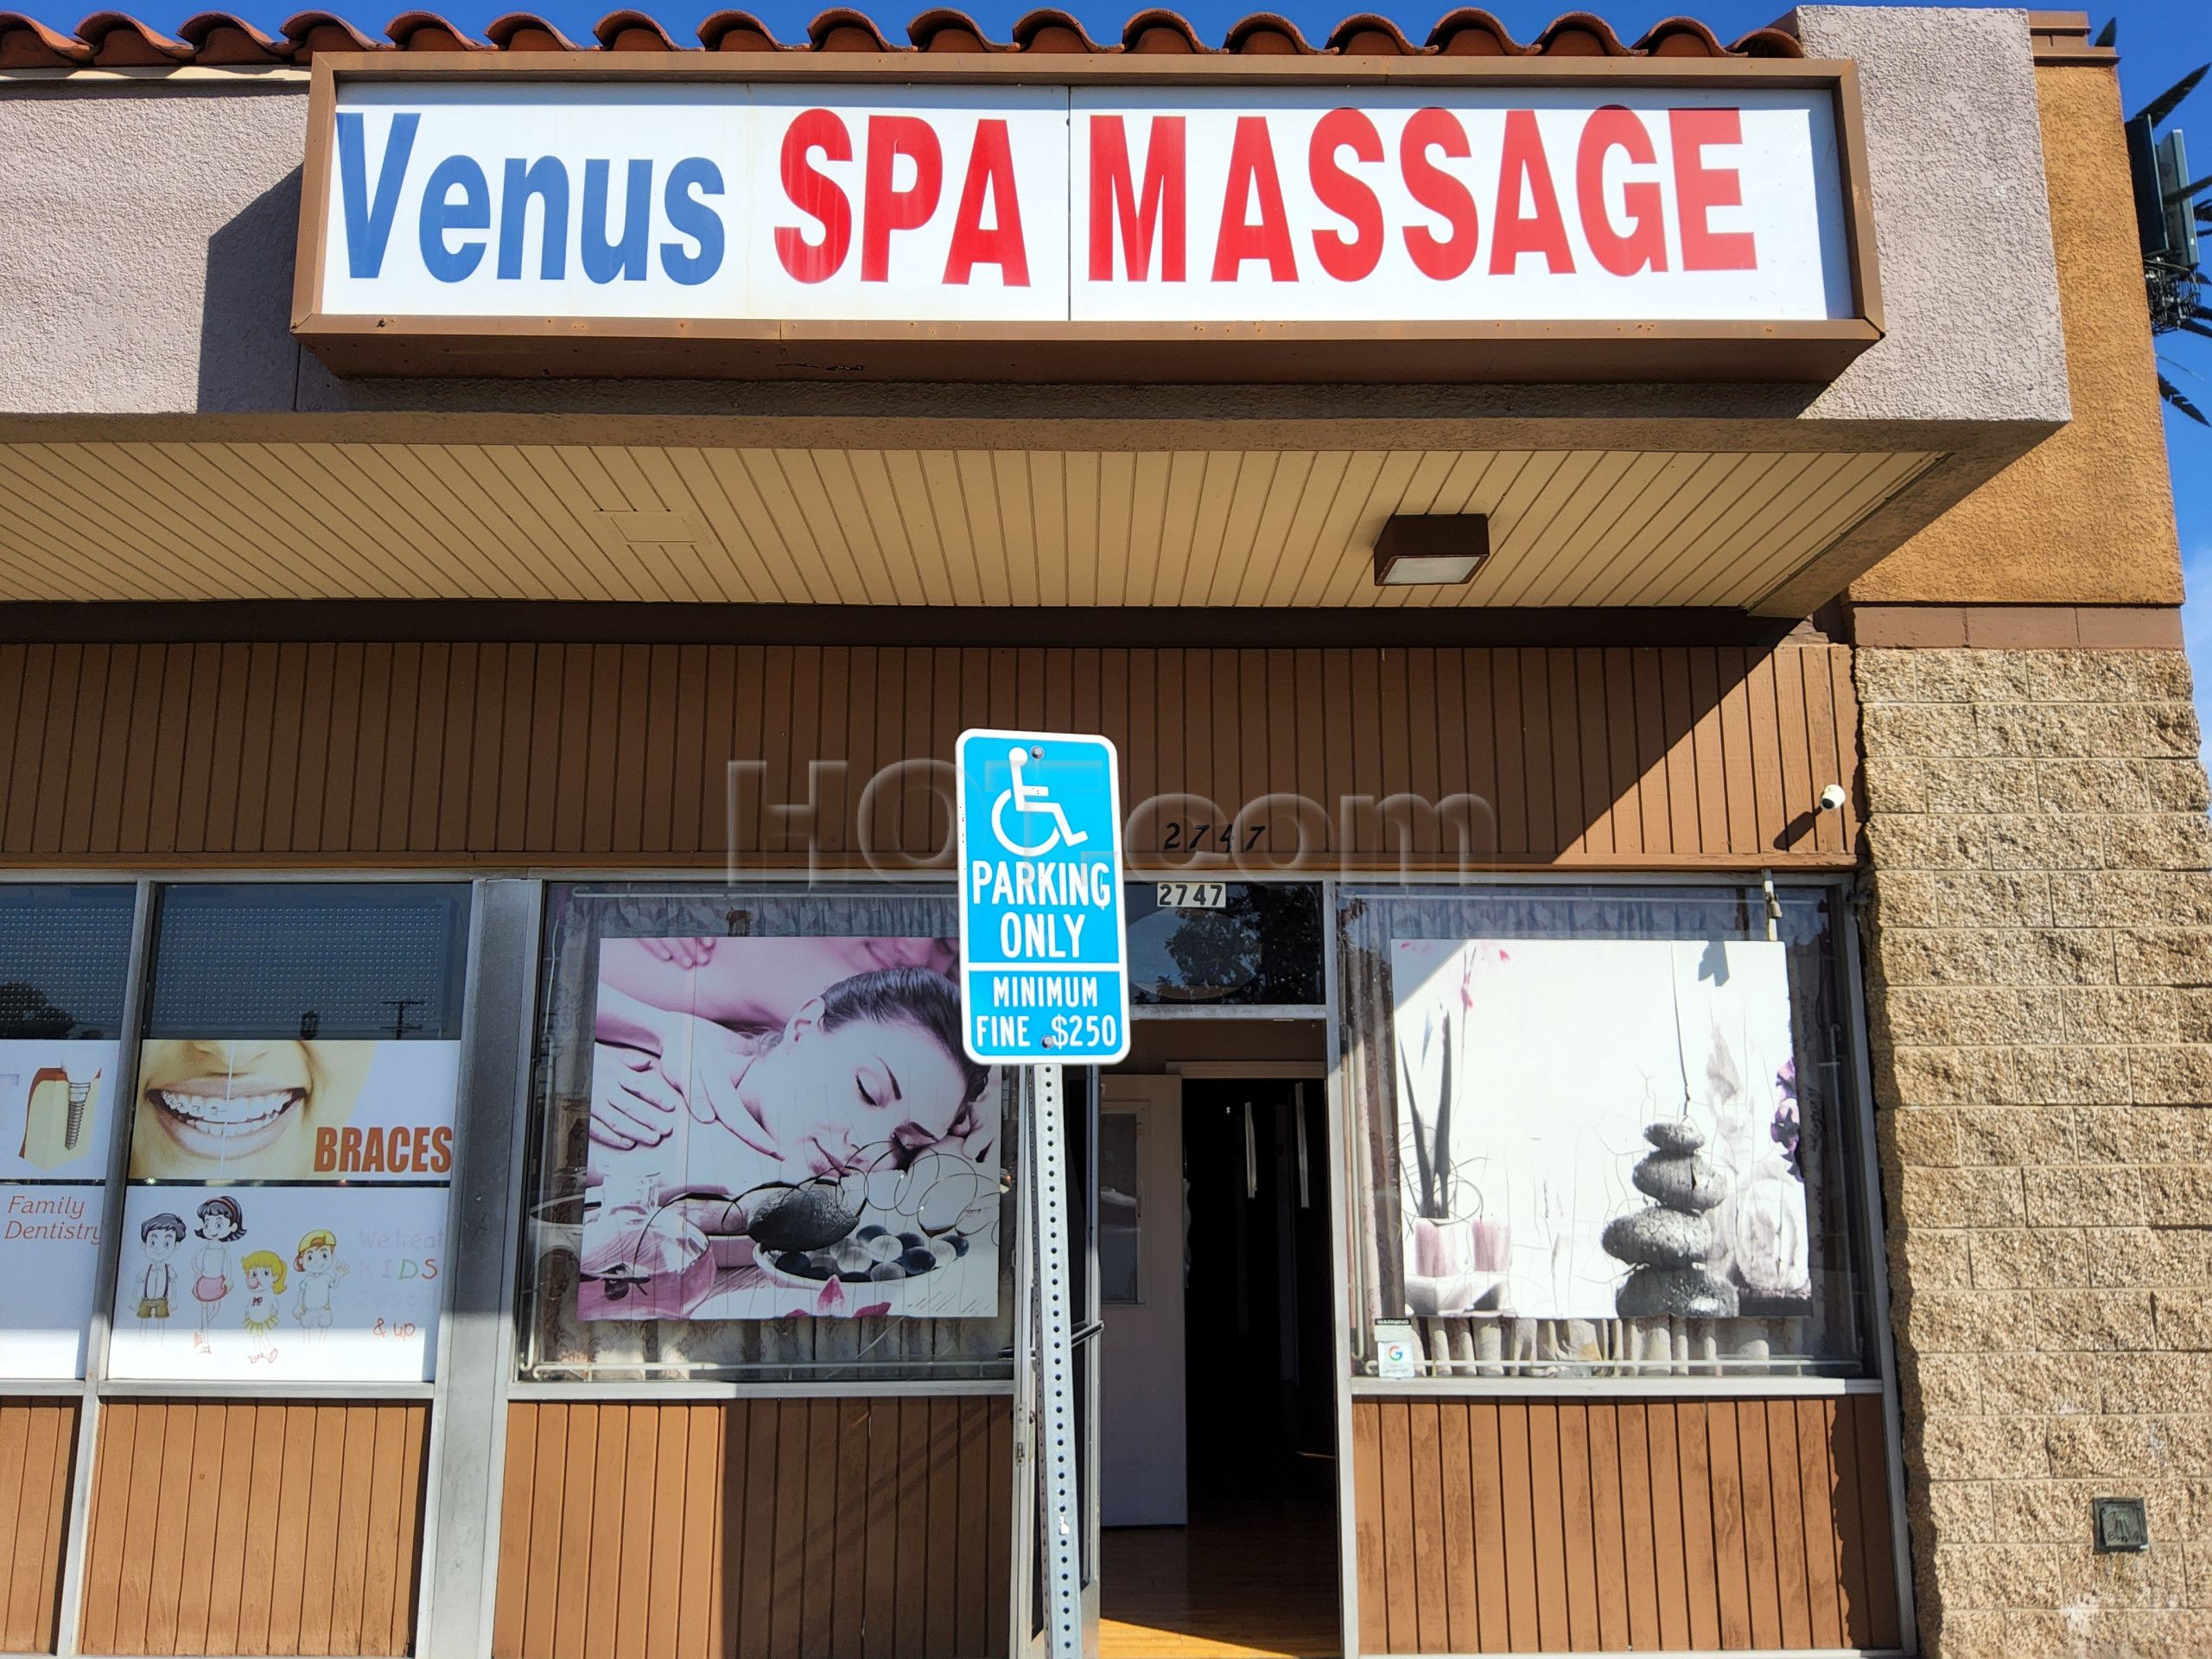 Santa Ana, California Venus Spa Massage